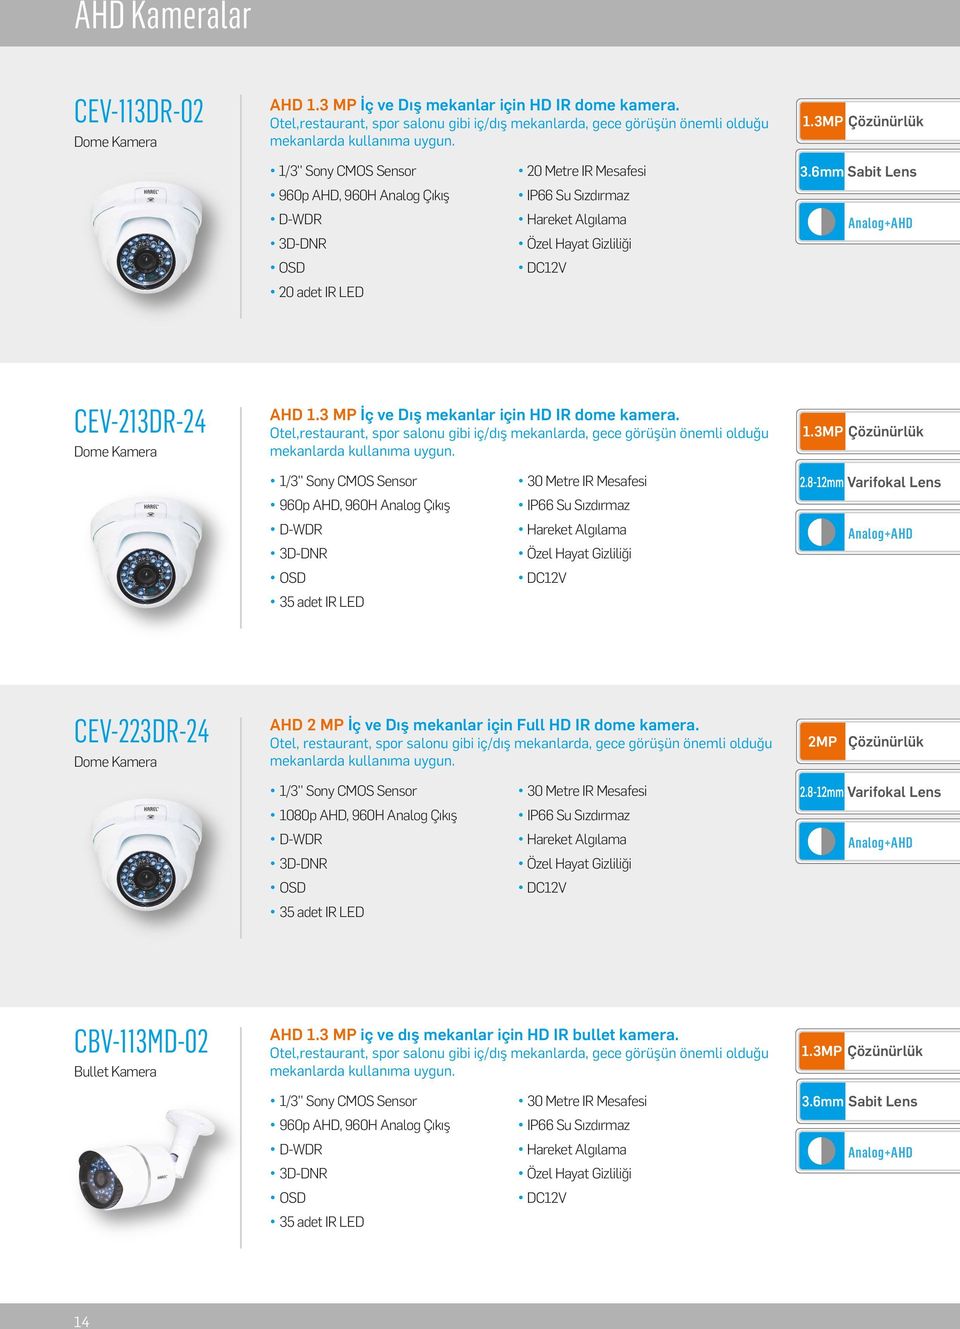 8-12mm Var fokal Lens Analog+AHD CEV-223DR-24 AHD 2 MP İç ve Dış mekanlar ç n Full HD IR dome kamera.